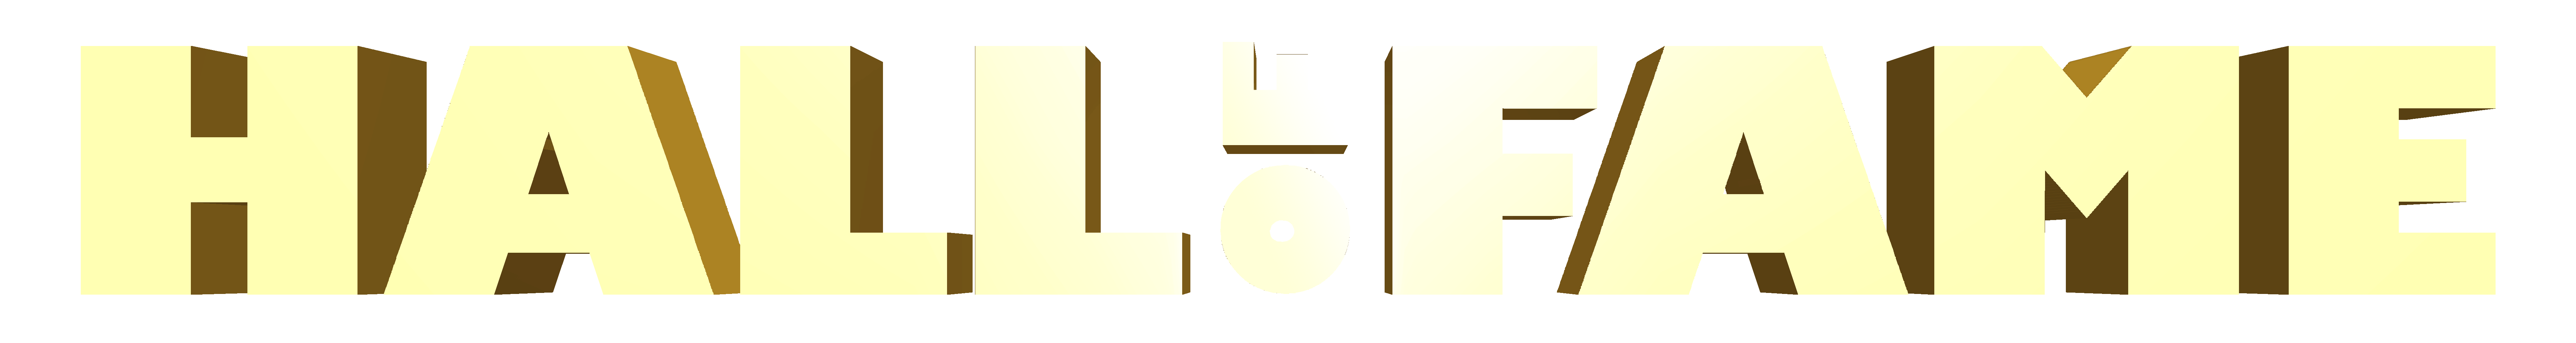 kamp-lintfort Logo